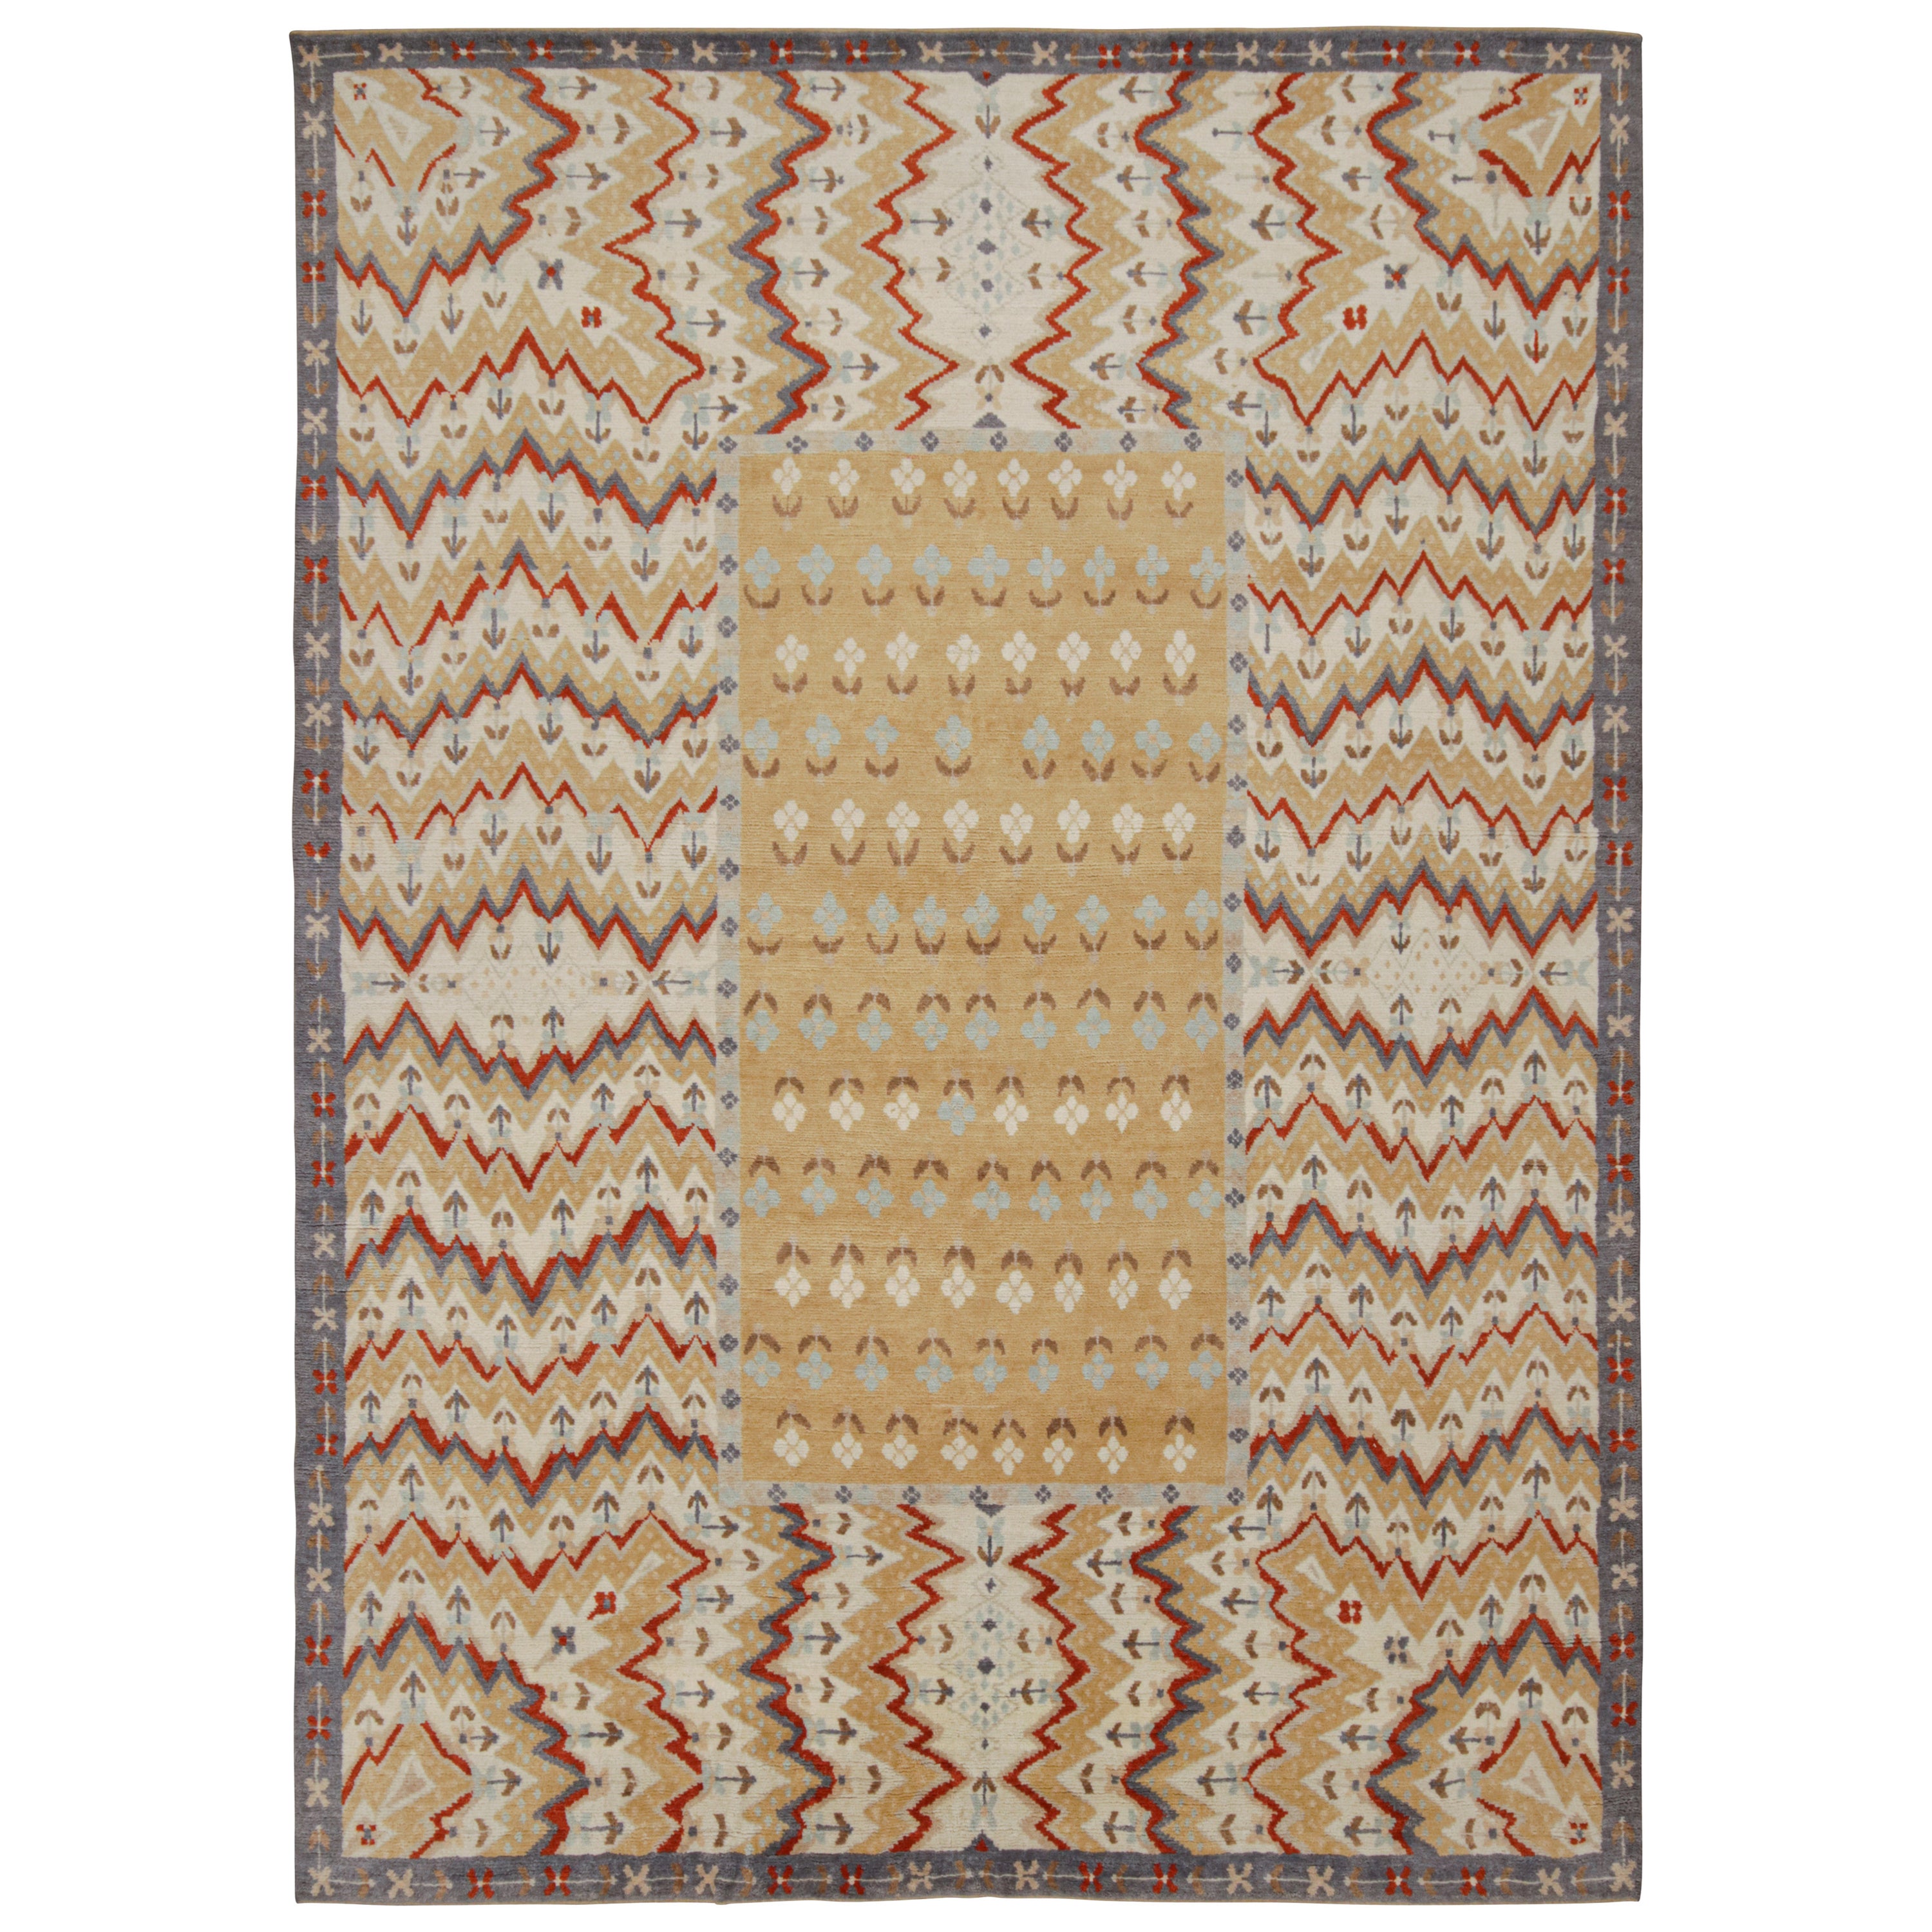 Rug & Kilim's Tribal Style Teppich in Gold, Grau & Rot Mustern